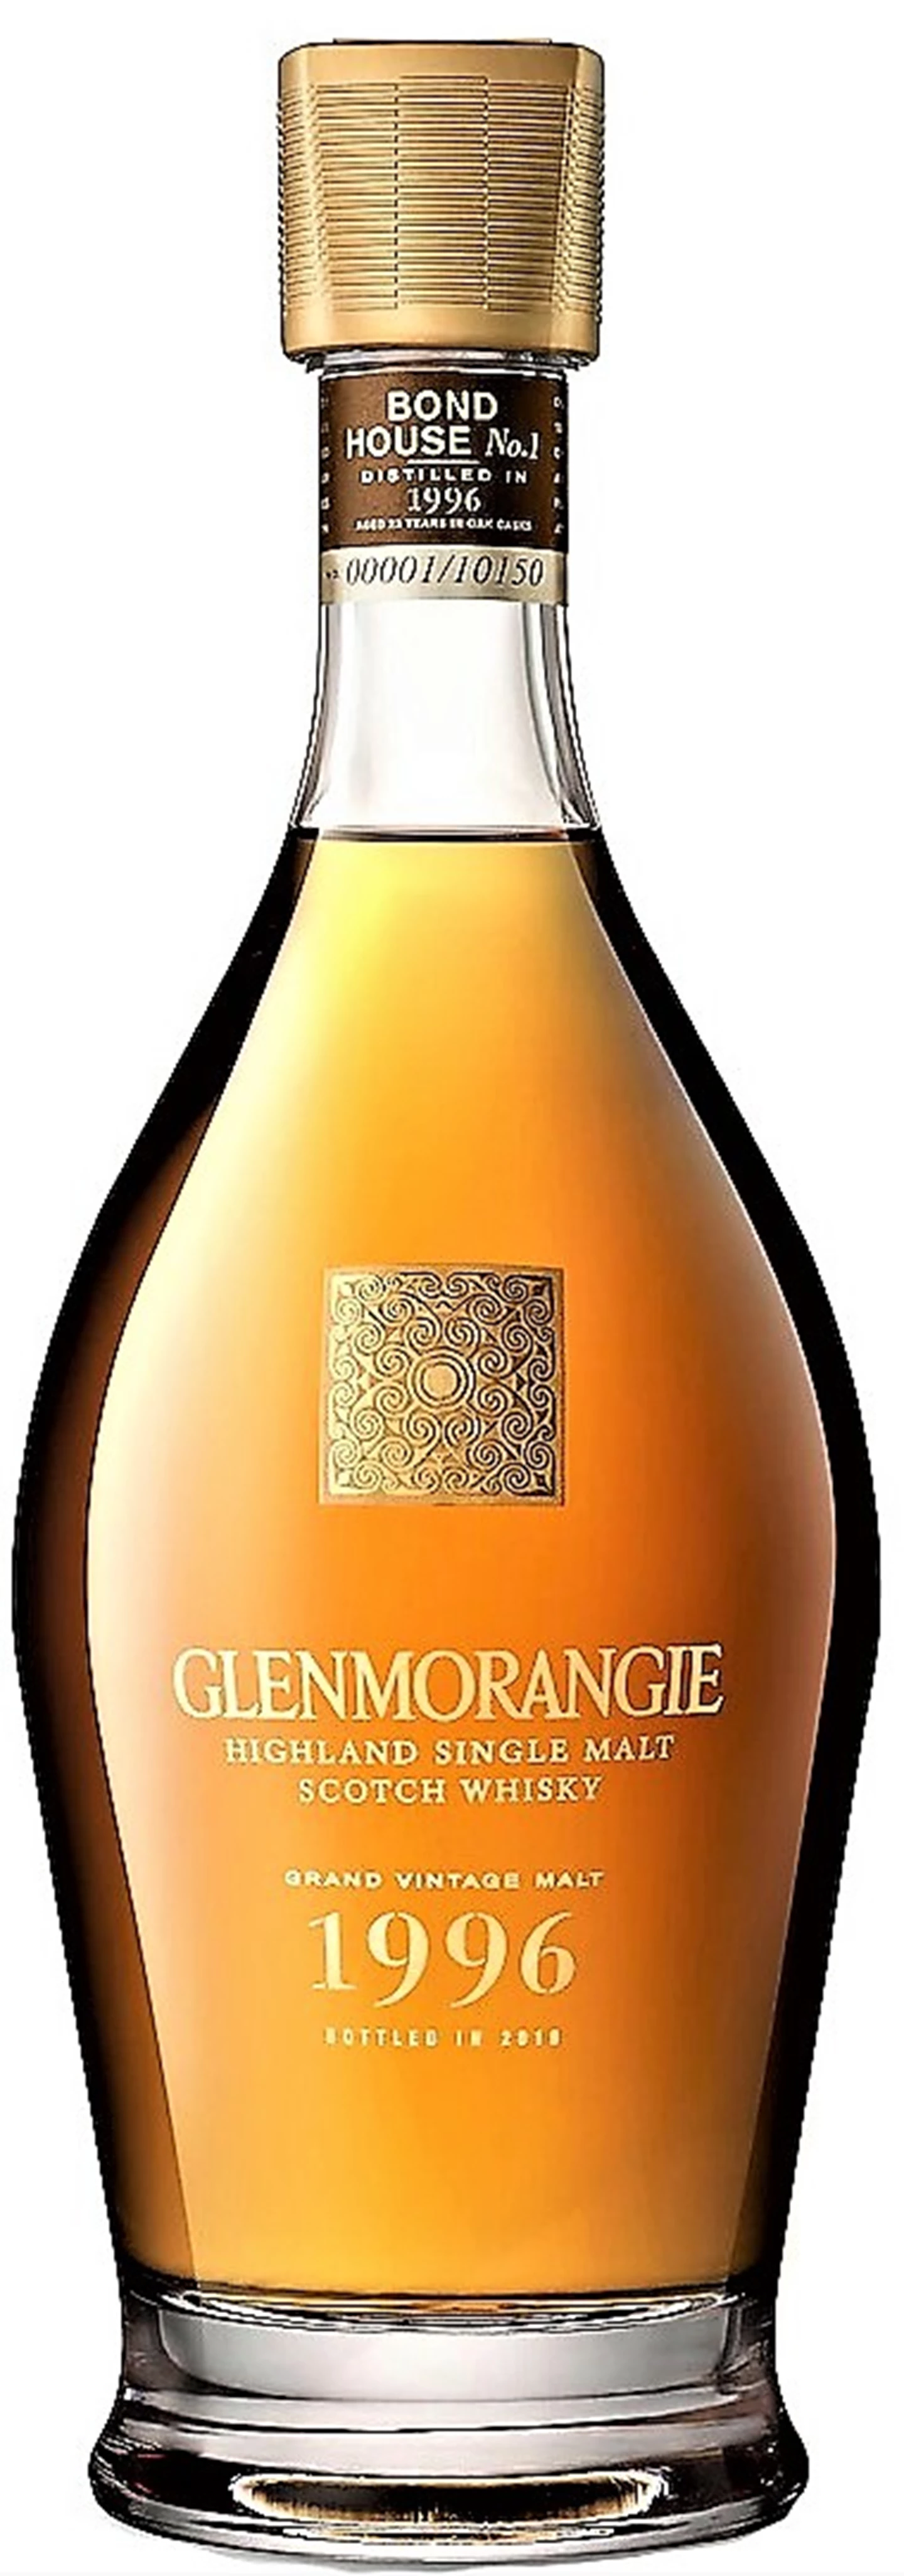 Glenmorangie_Grand-vintage-malt-1996